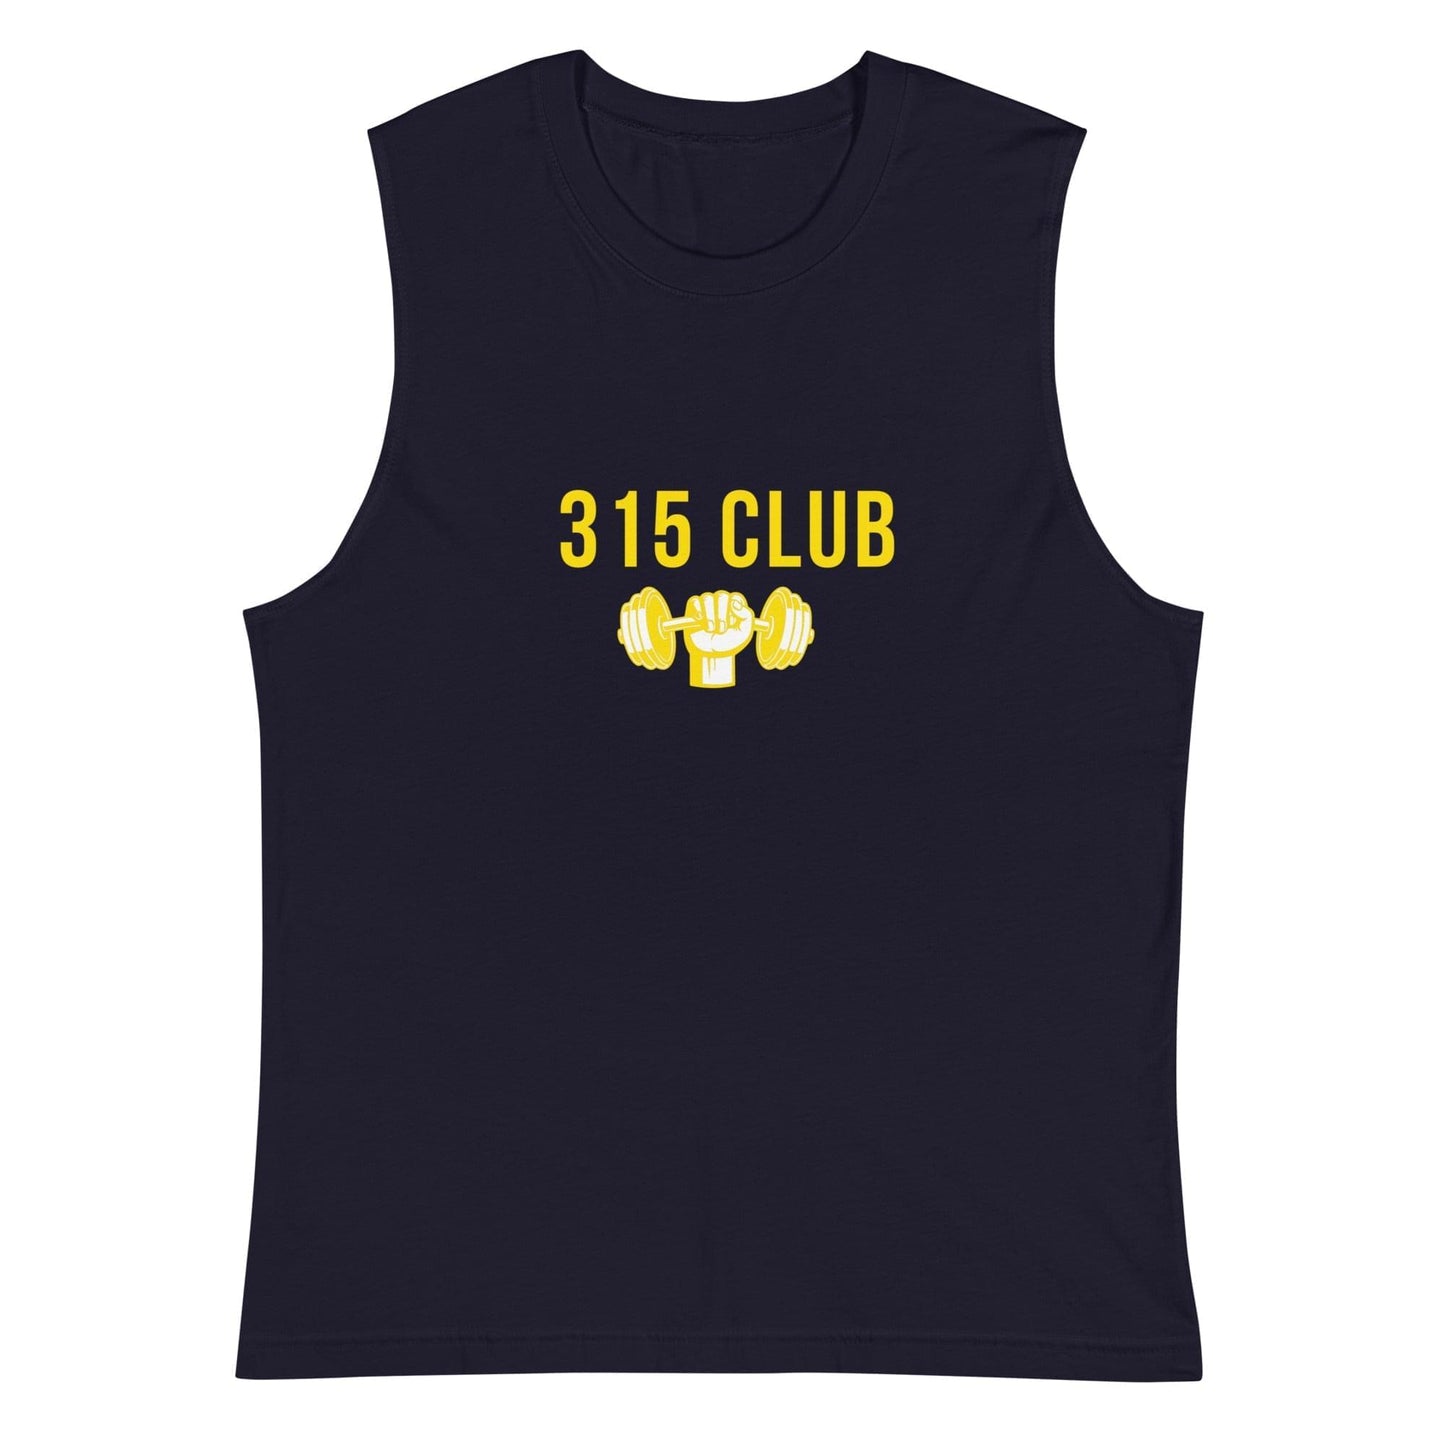 Camiseta sin mangas muscular 315 CLUB